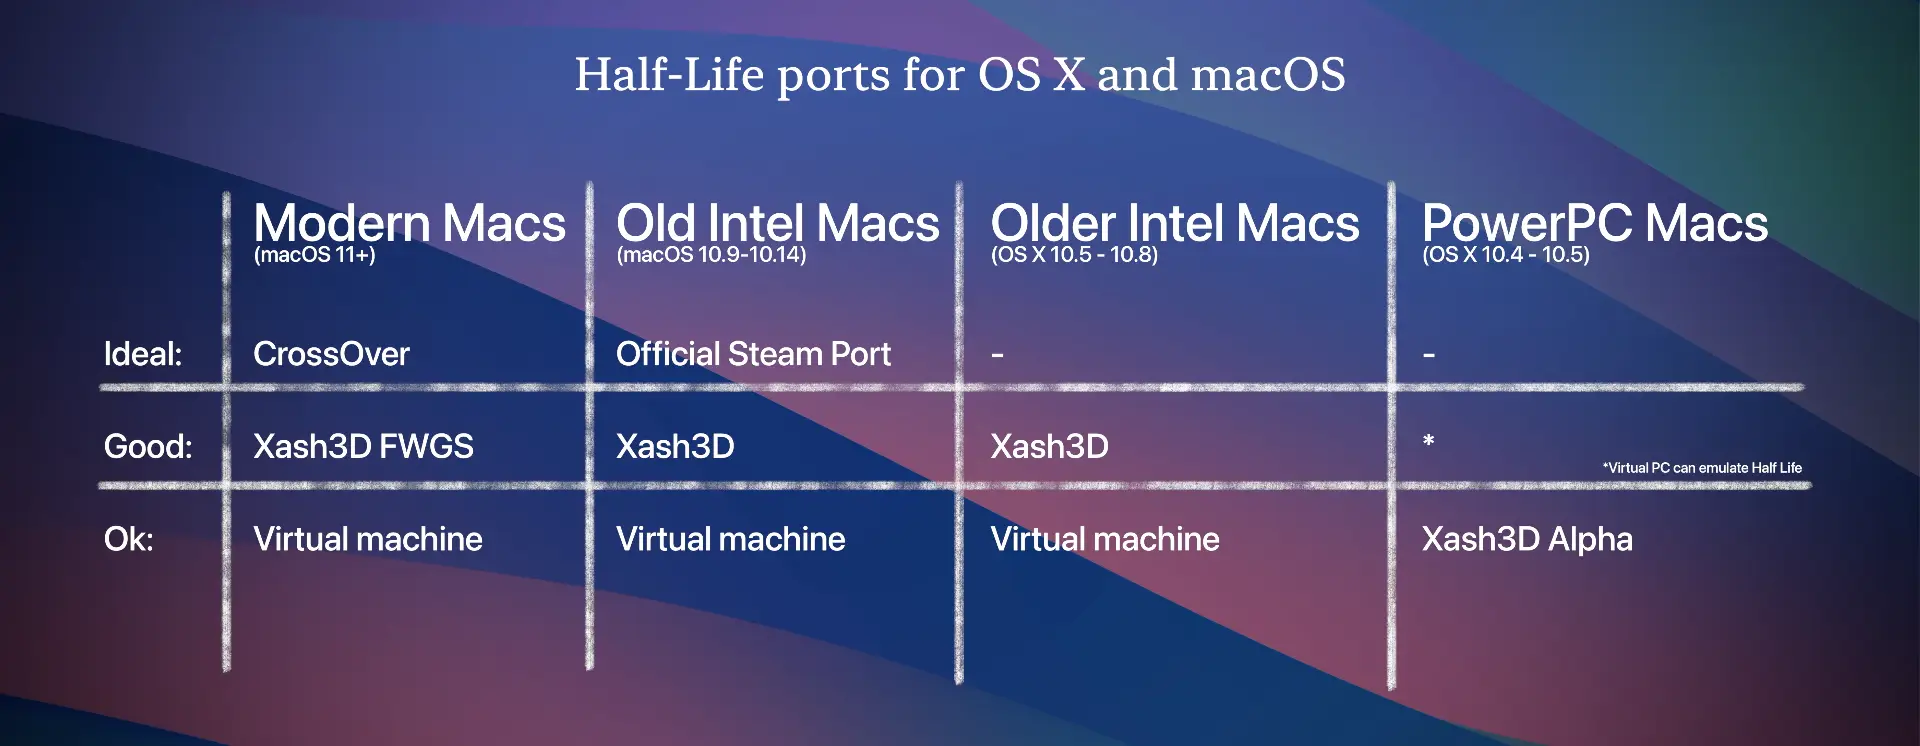 Mac Half-Life port guide